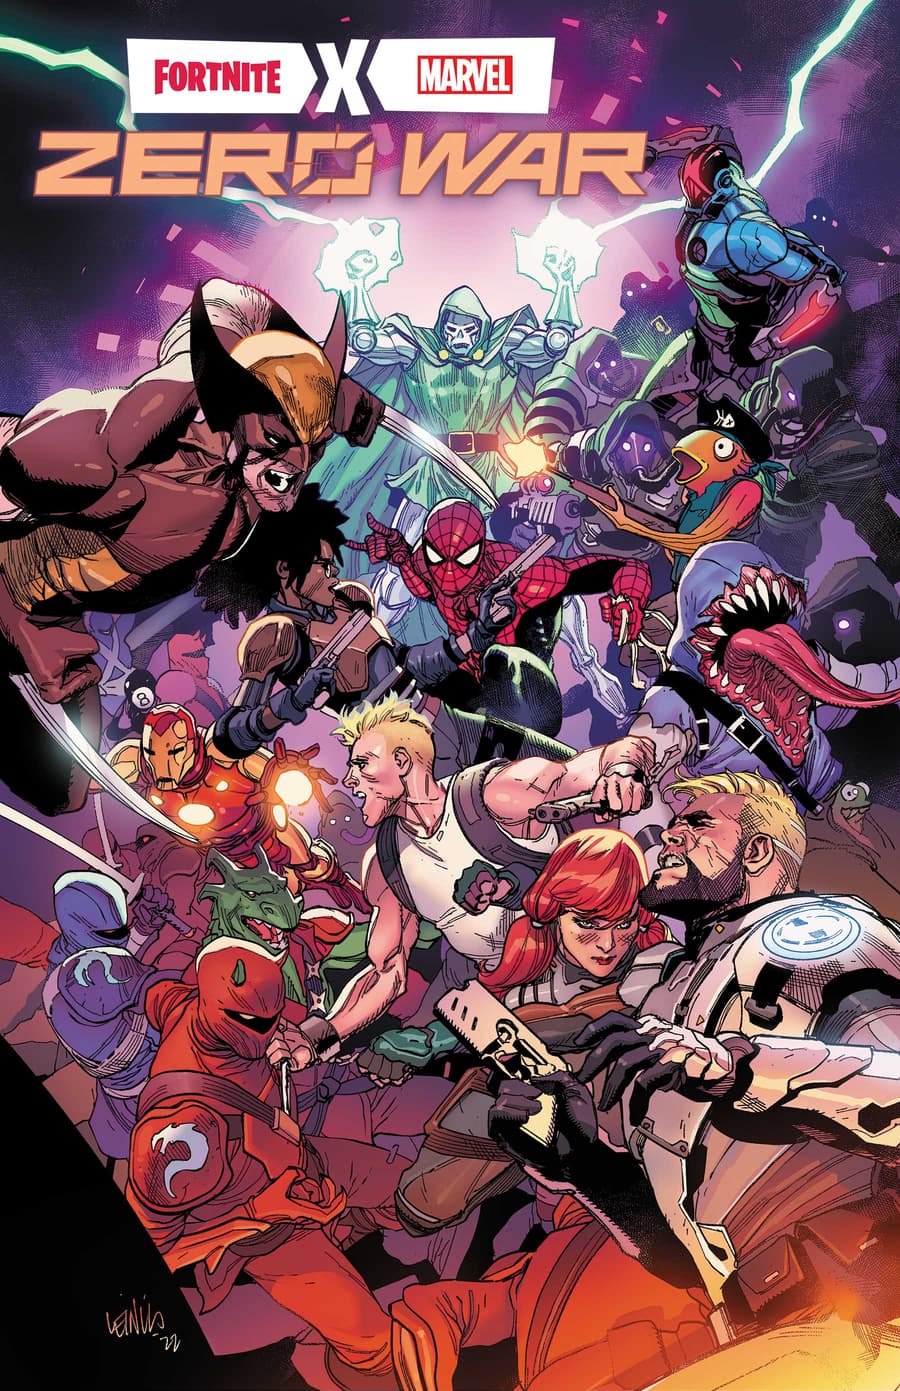 Marvel X Fortnite: Zero War #5 Cover by LEINIL FRANCIS YU